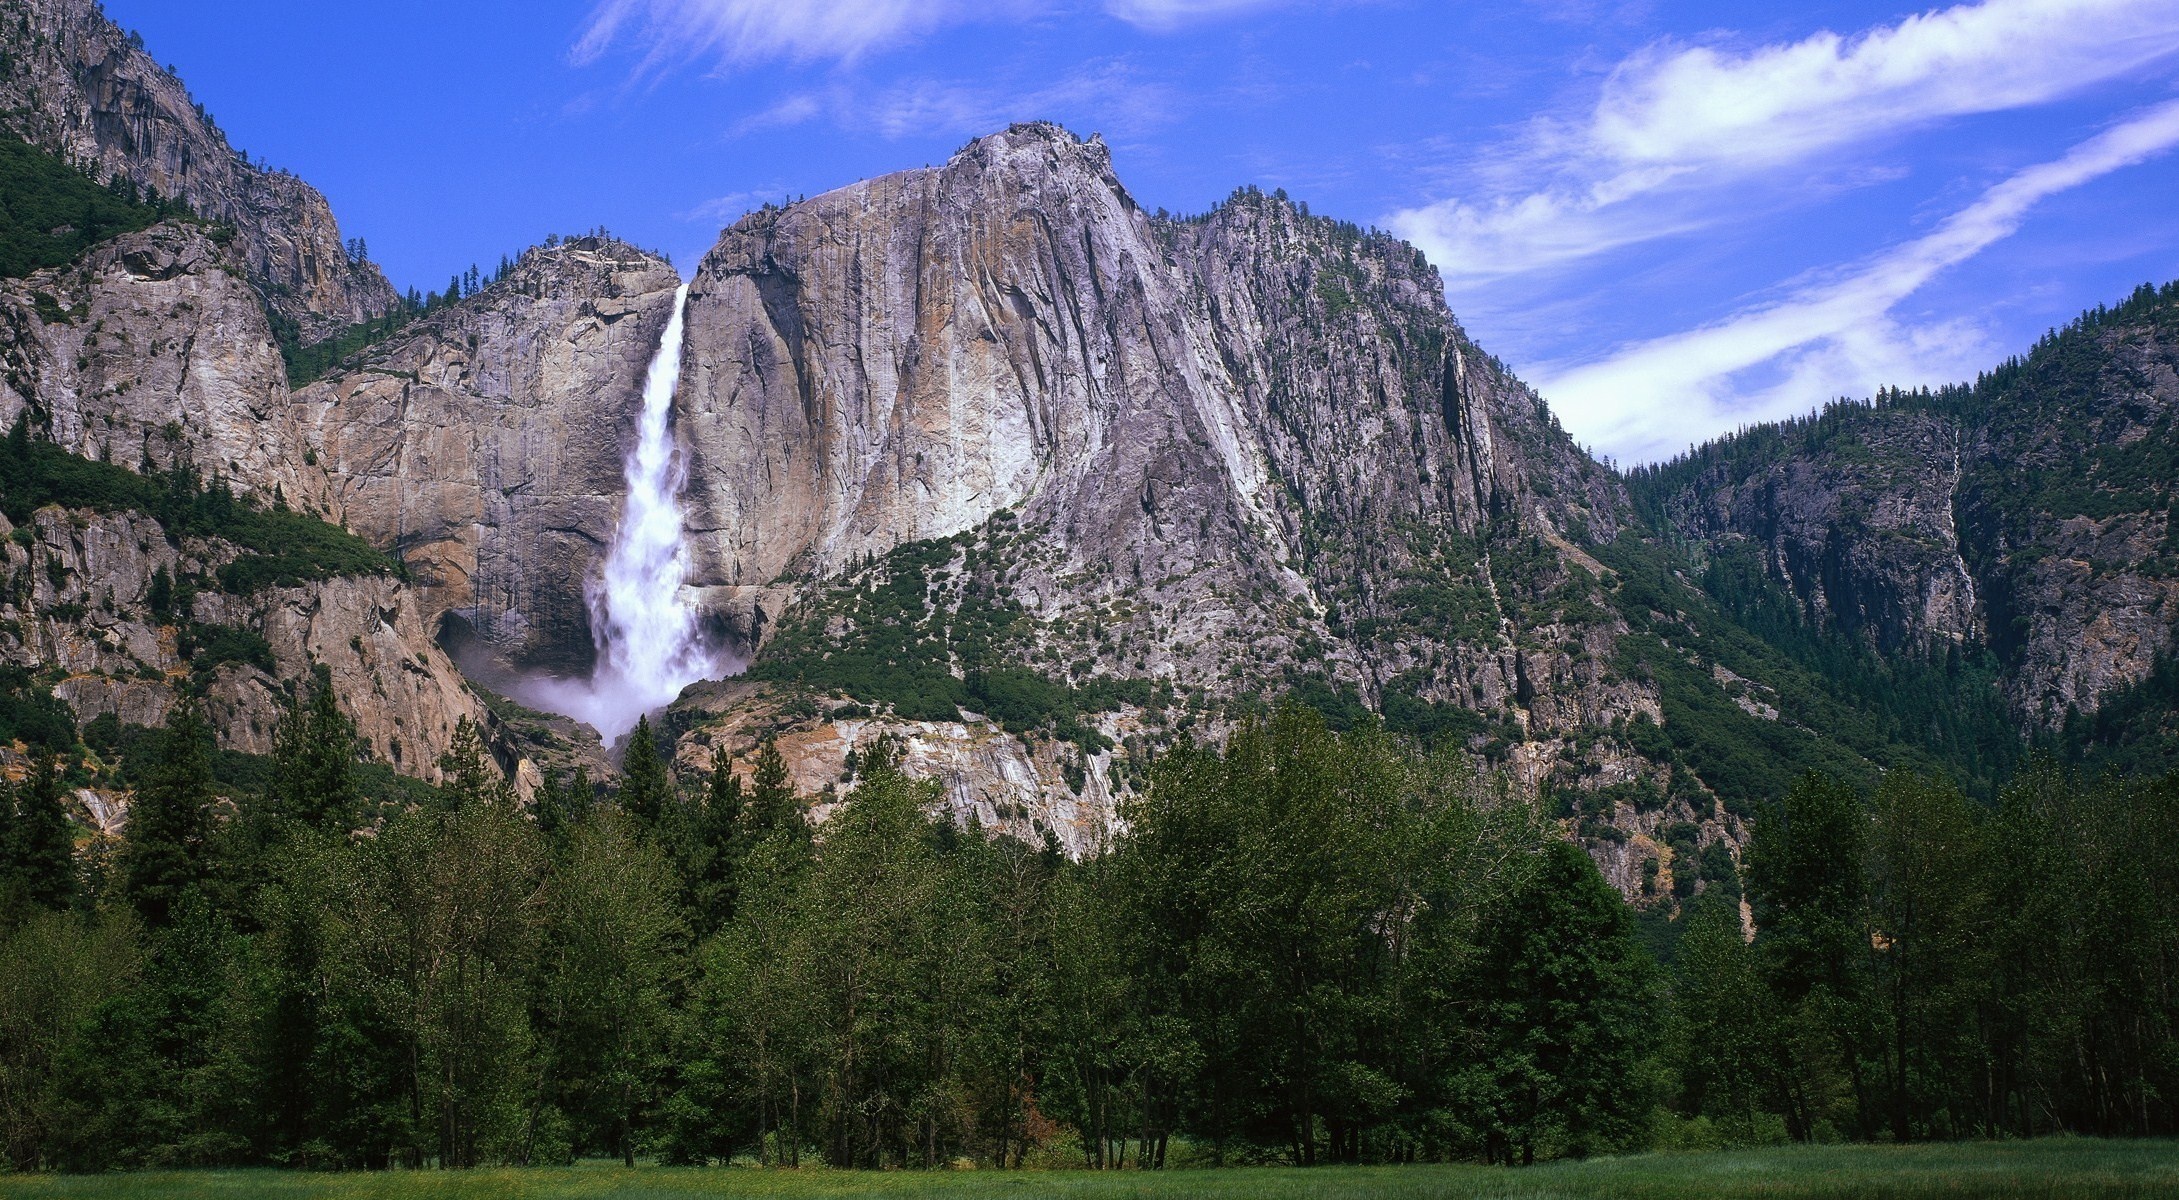  Yosemite National Park Yosemite California USA desktop wallpaper 2179x1200